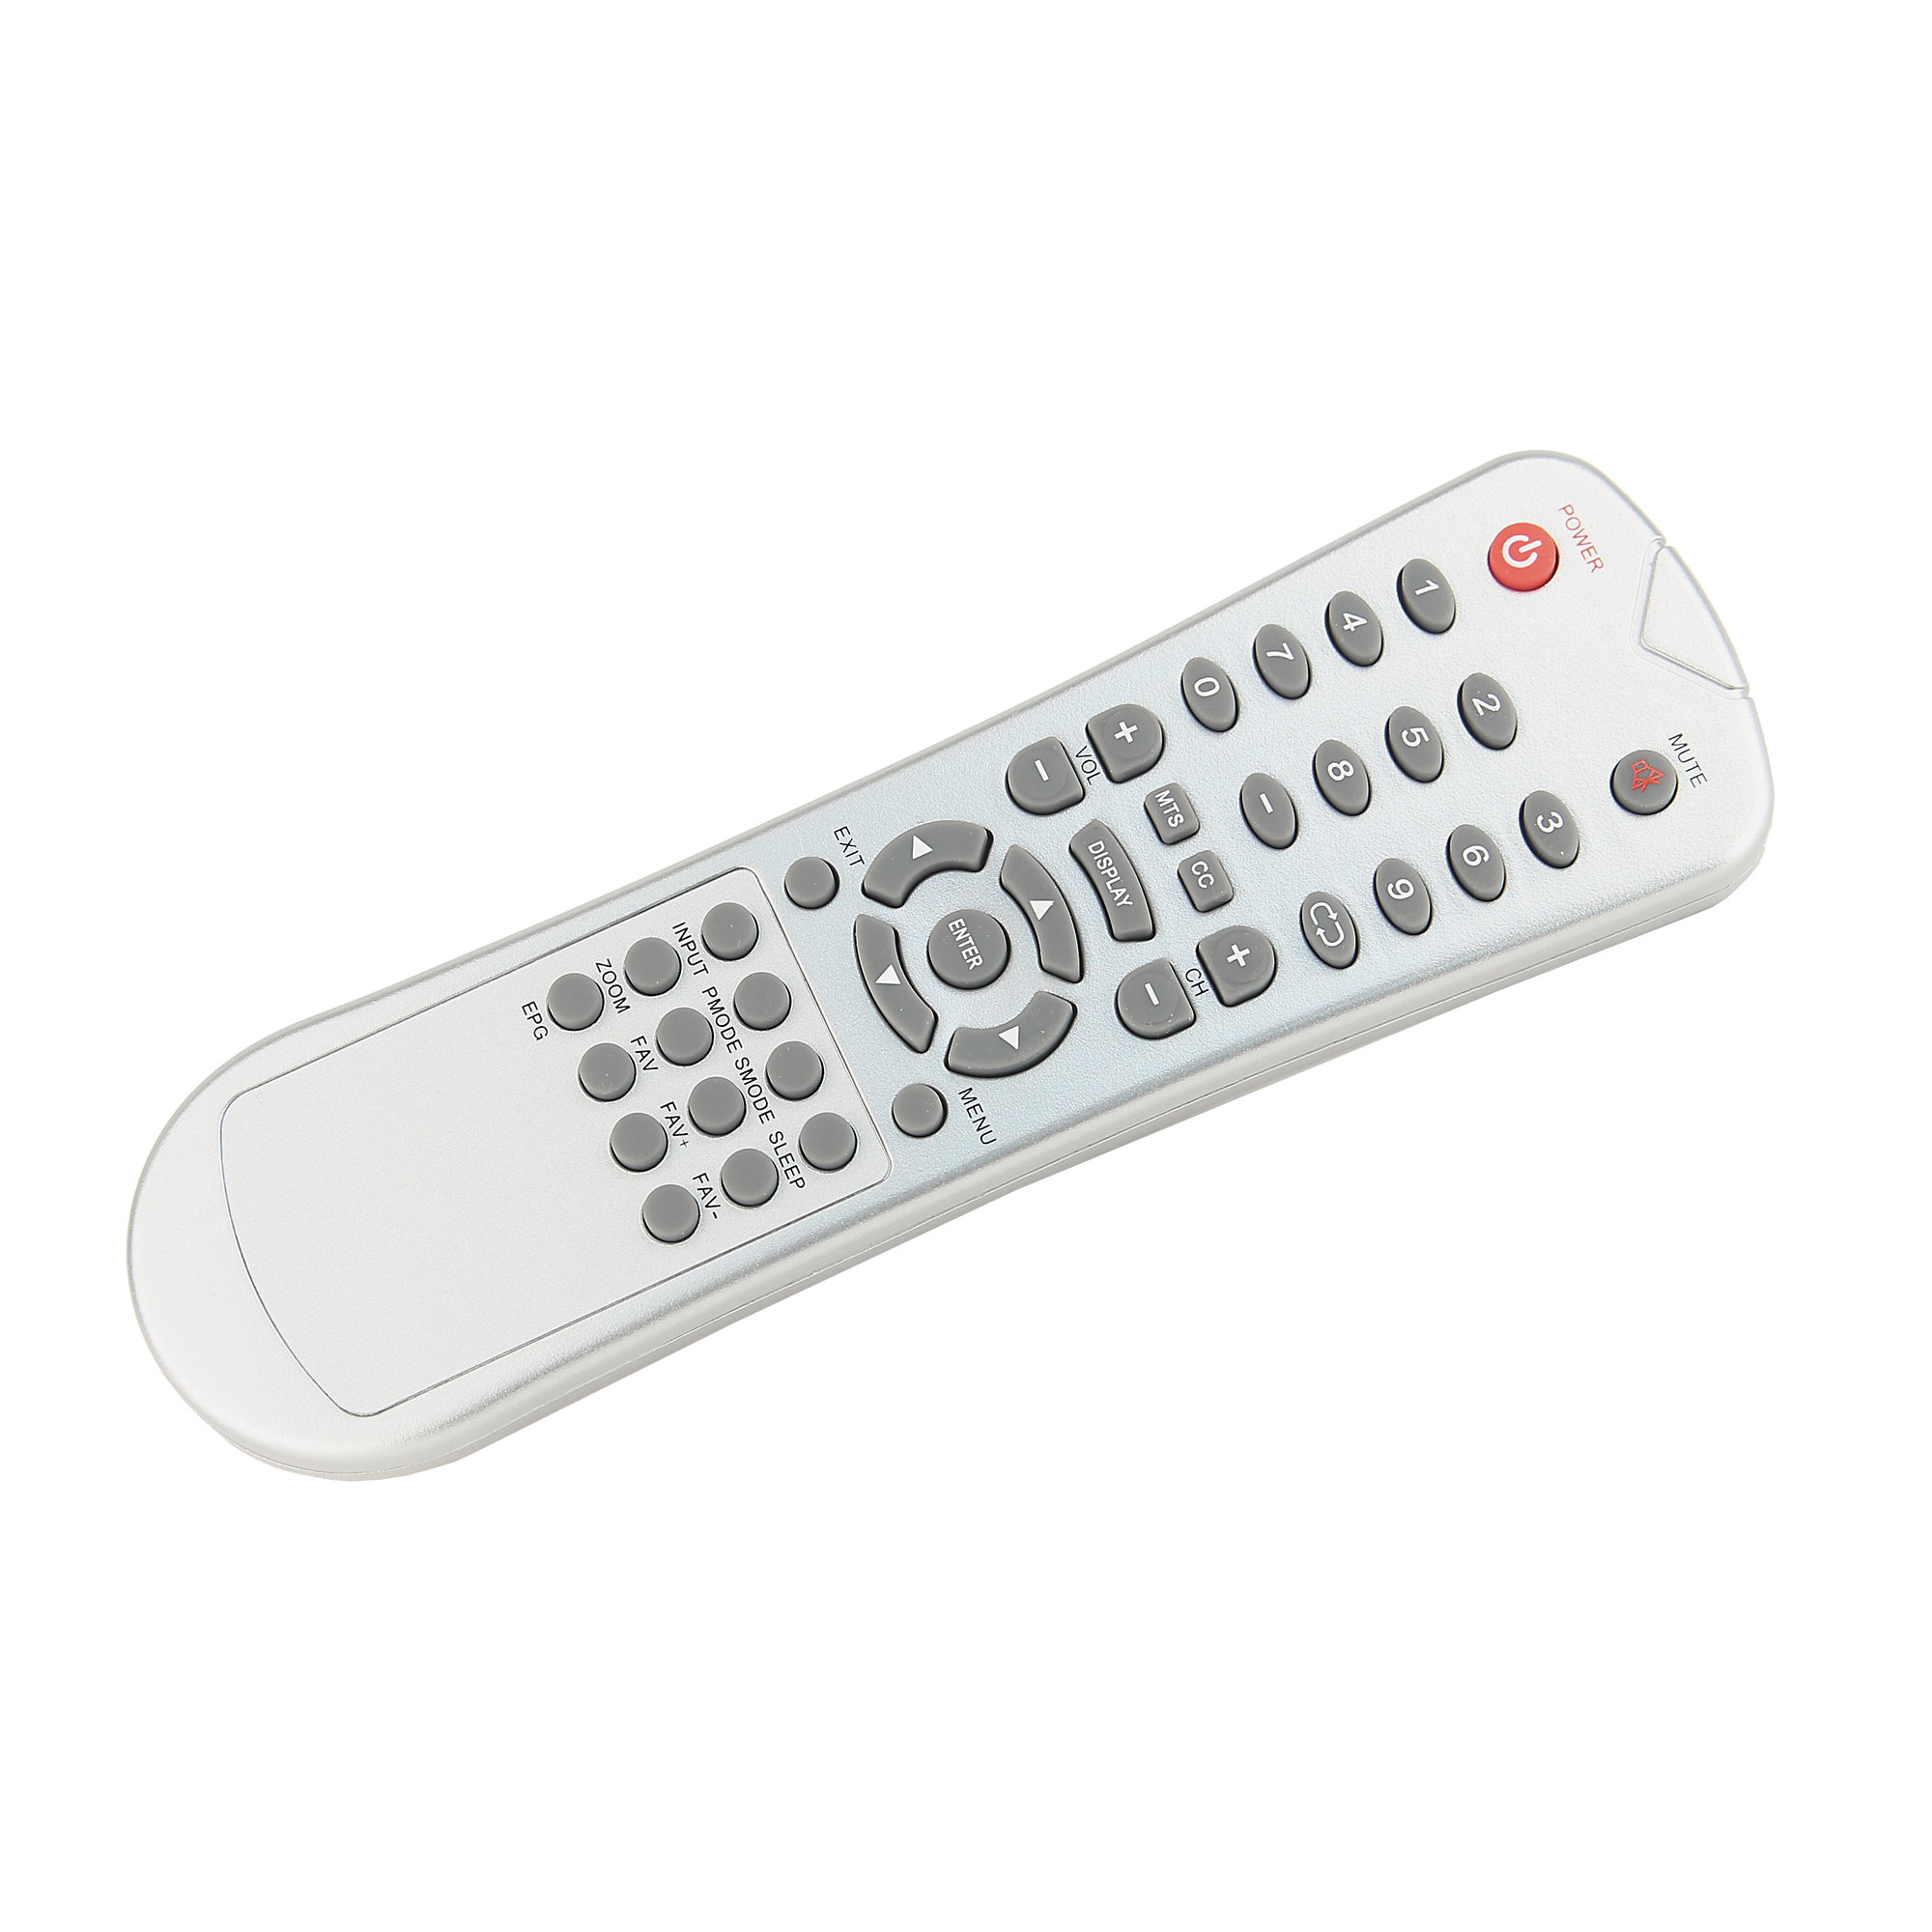 Non-Life Fitness TV Remote Control, LifeFitness